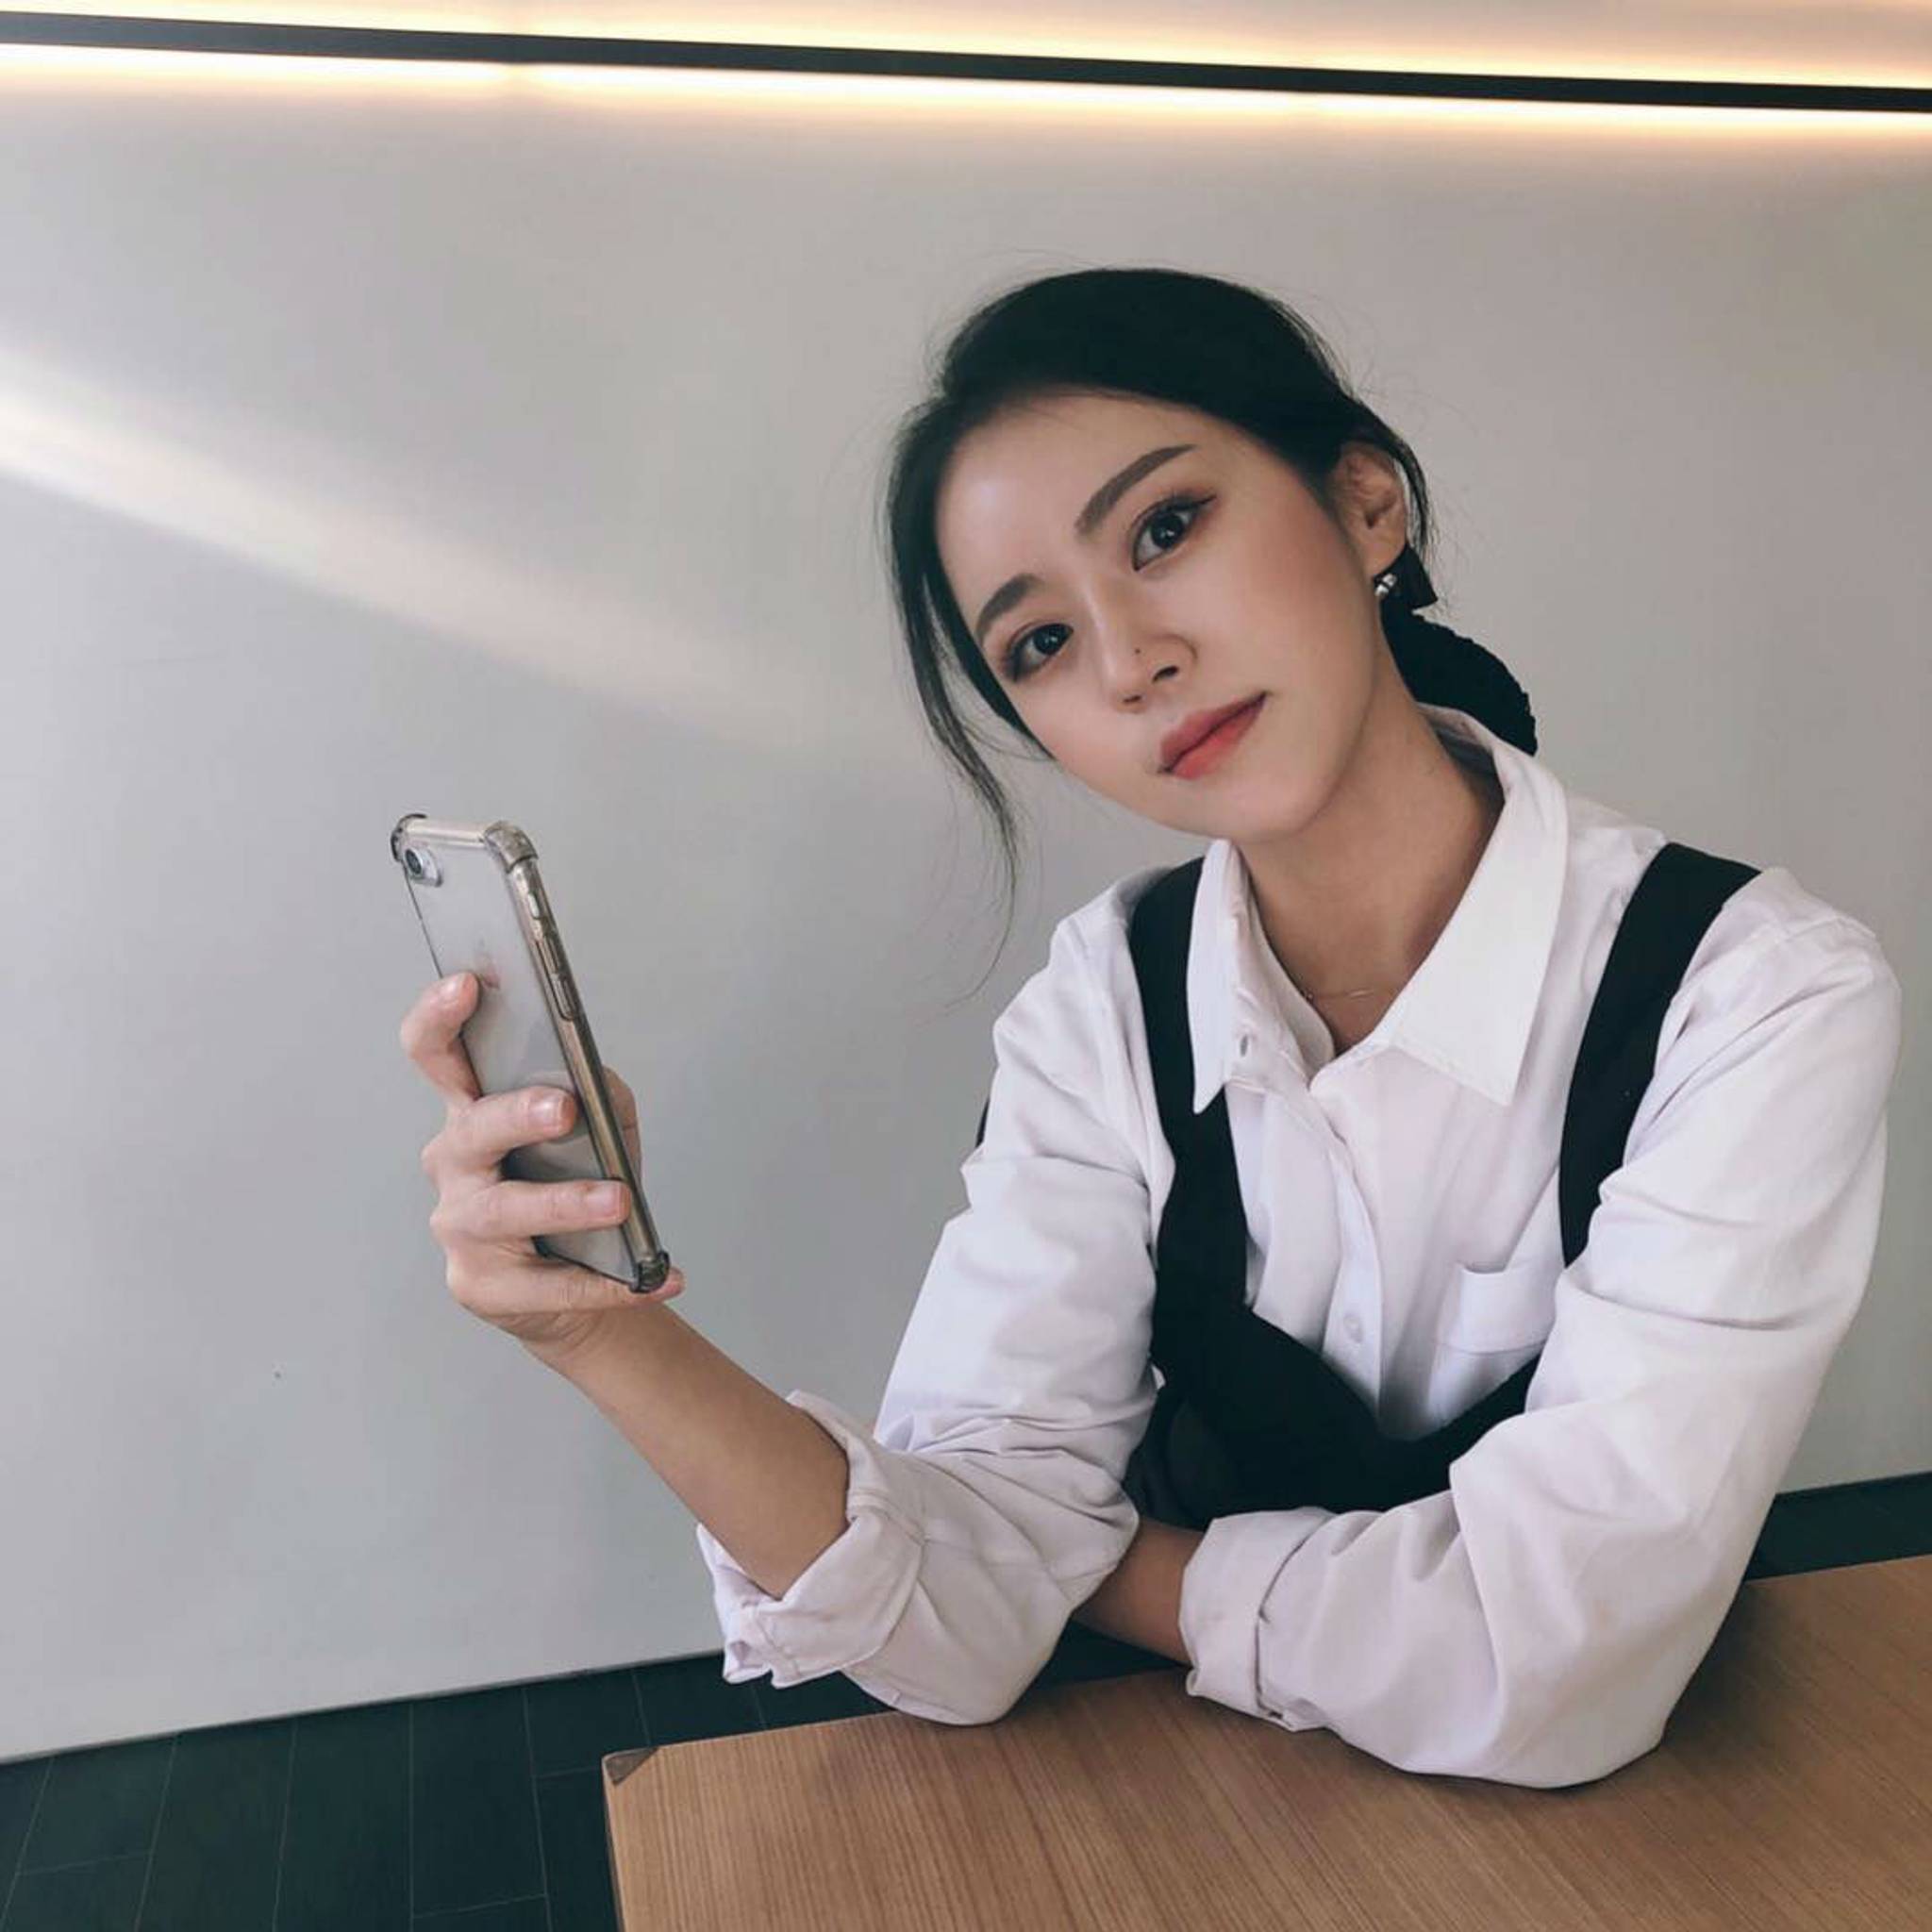 Korean women ruin makeup to protest beauty ideals